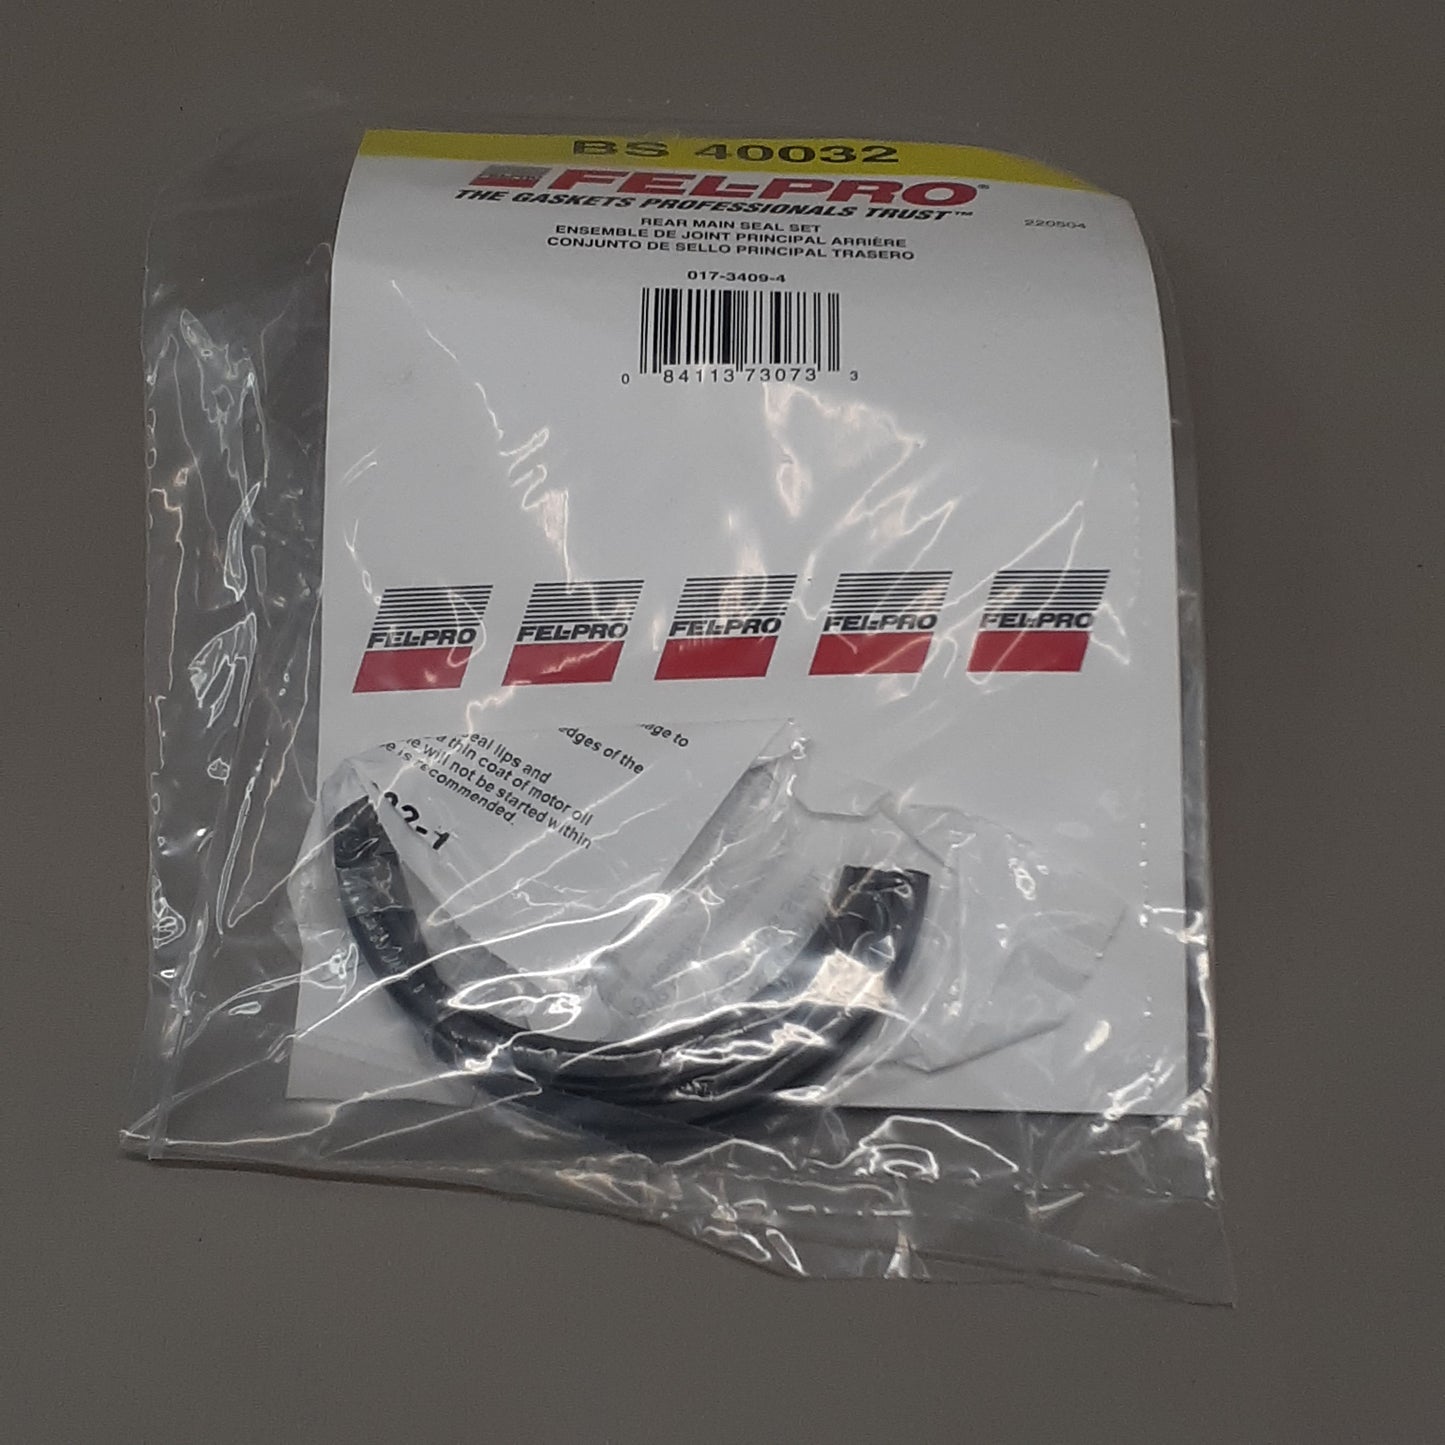 FEL-PRO Rear Main Seal Set BS40032 (New)